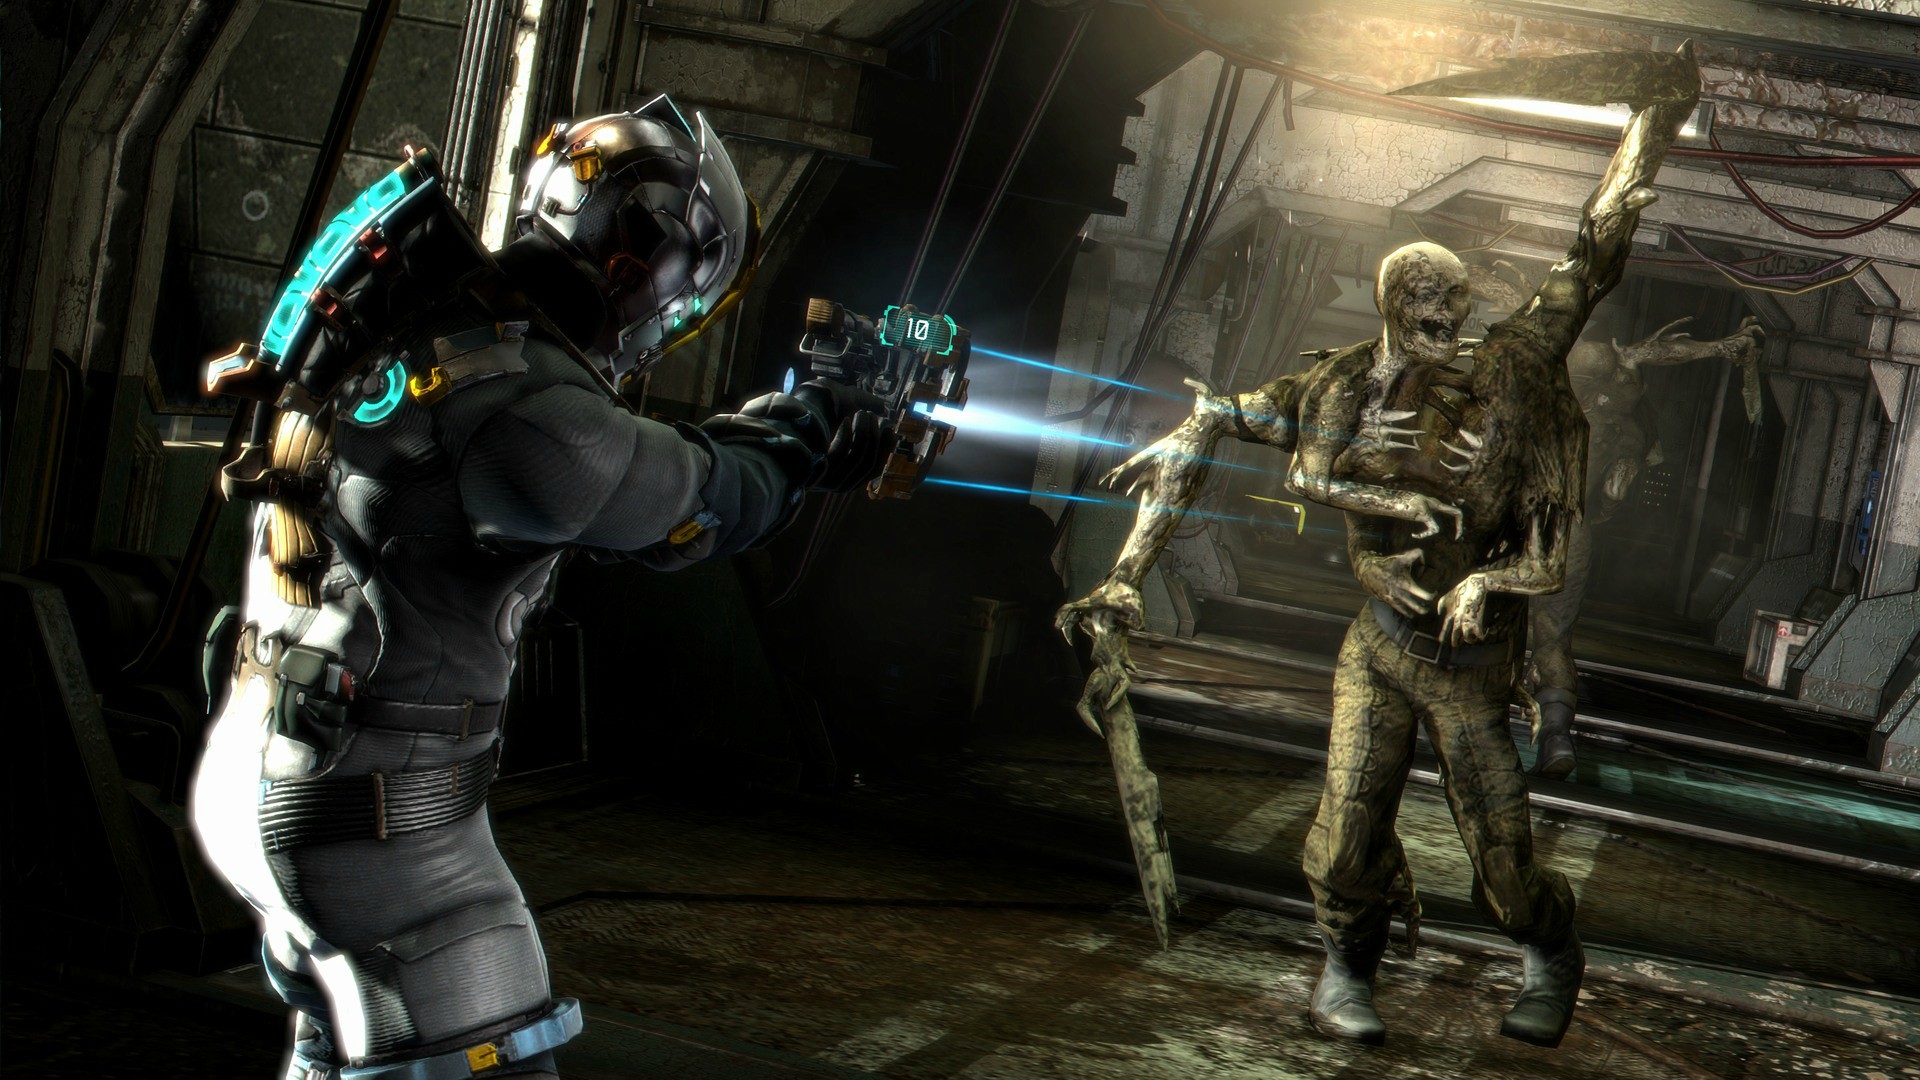 Creative Director ของ Dead Space เผย มีไอเดียสำหรับ Dead Space 4 เเล้ว เเละอาจจะมีการเปลี่ยนตัวเอกของเกม